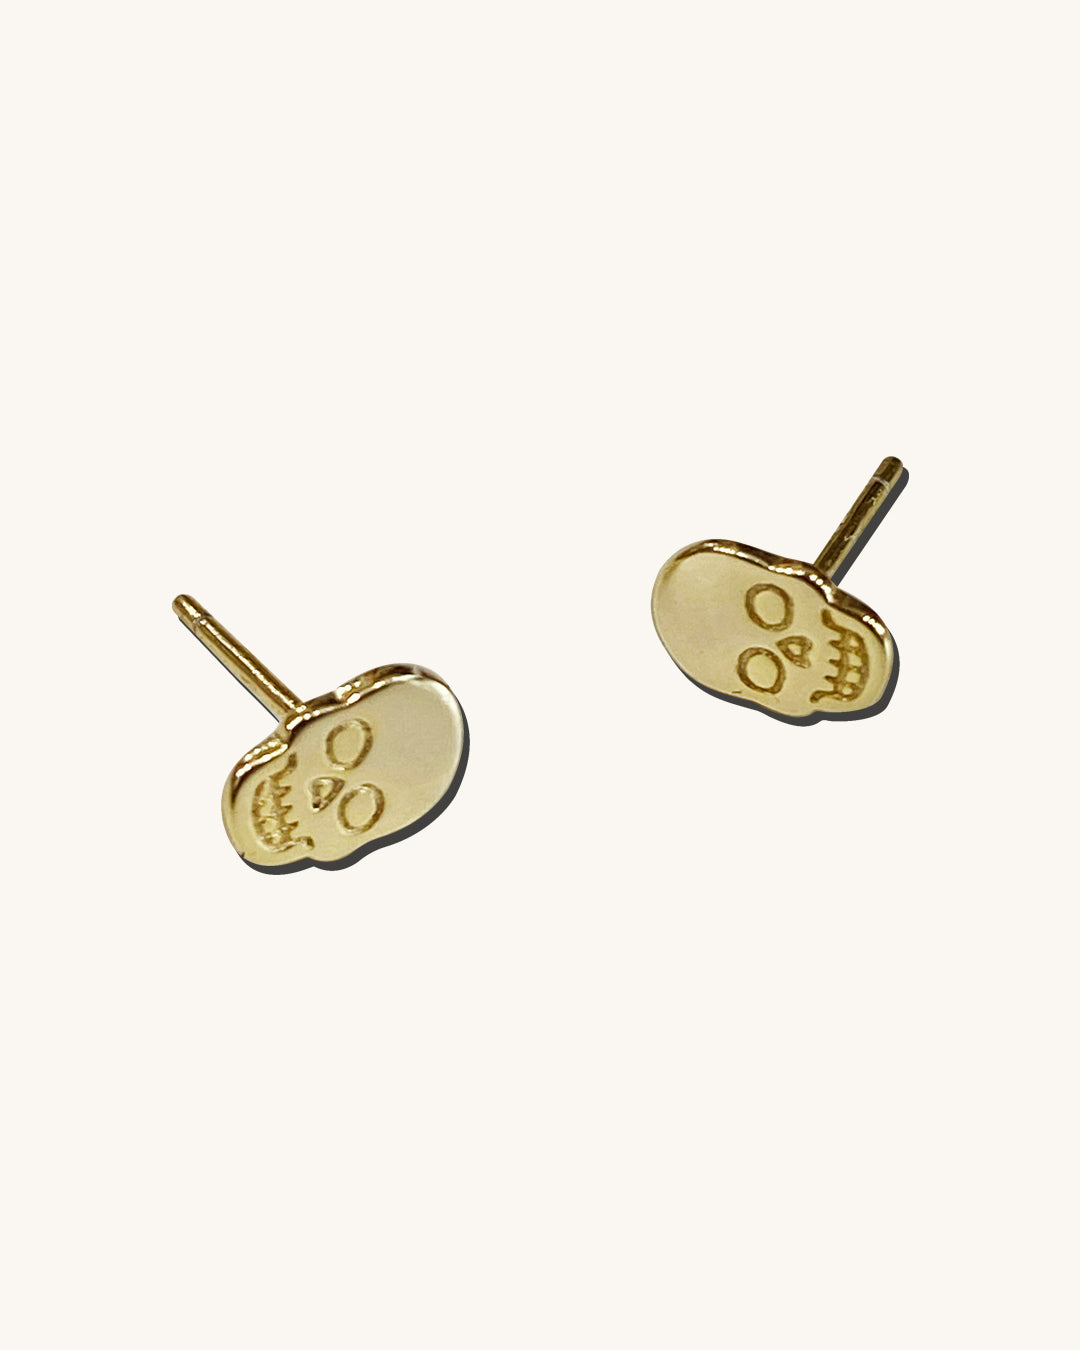 Pressed Gold Skull Stud Earrings